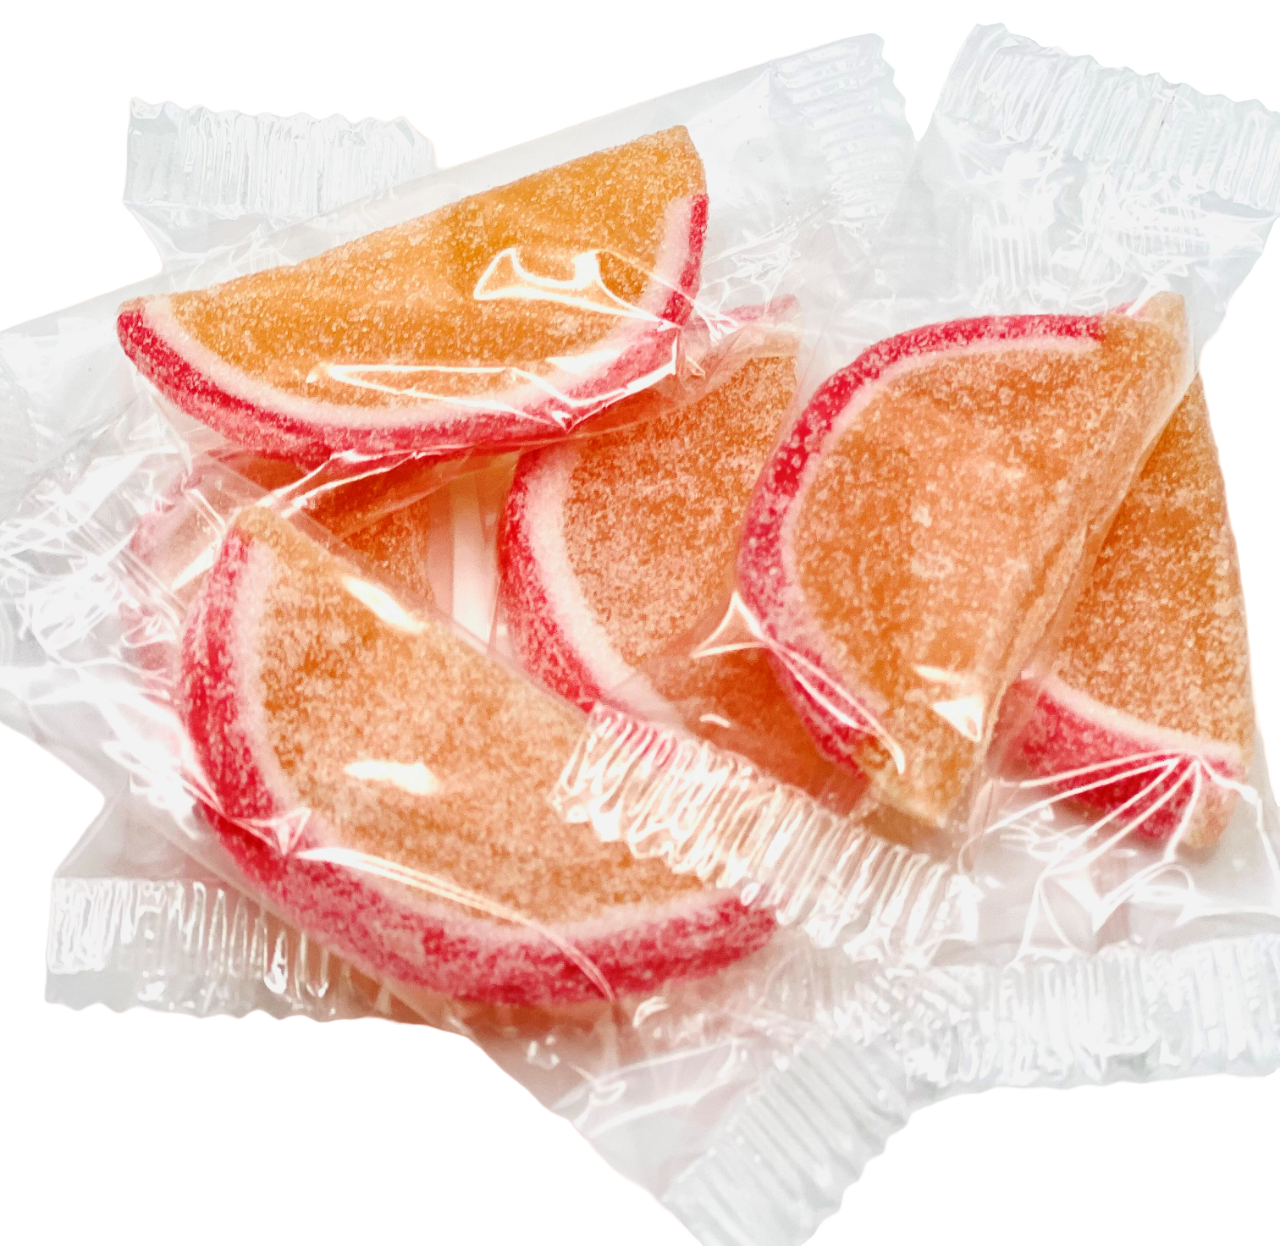 Individually Wrapped Fruit Slices - BULK